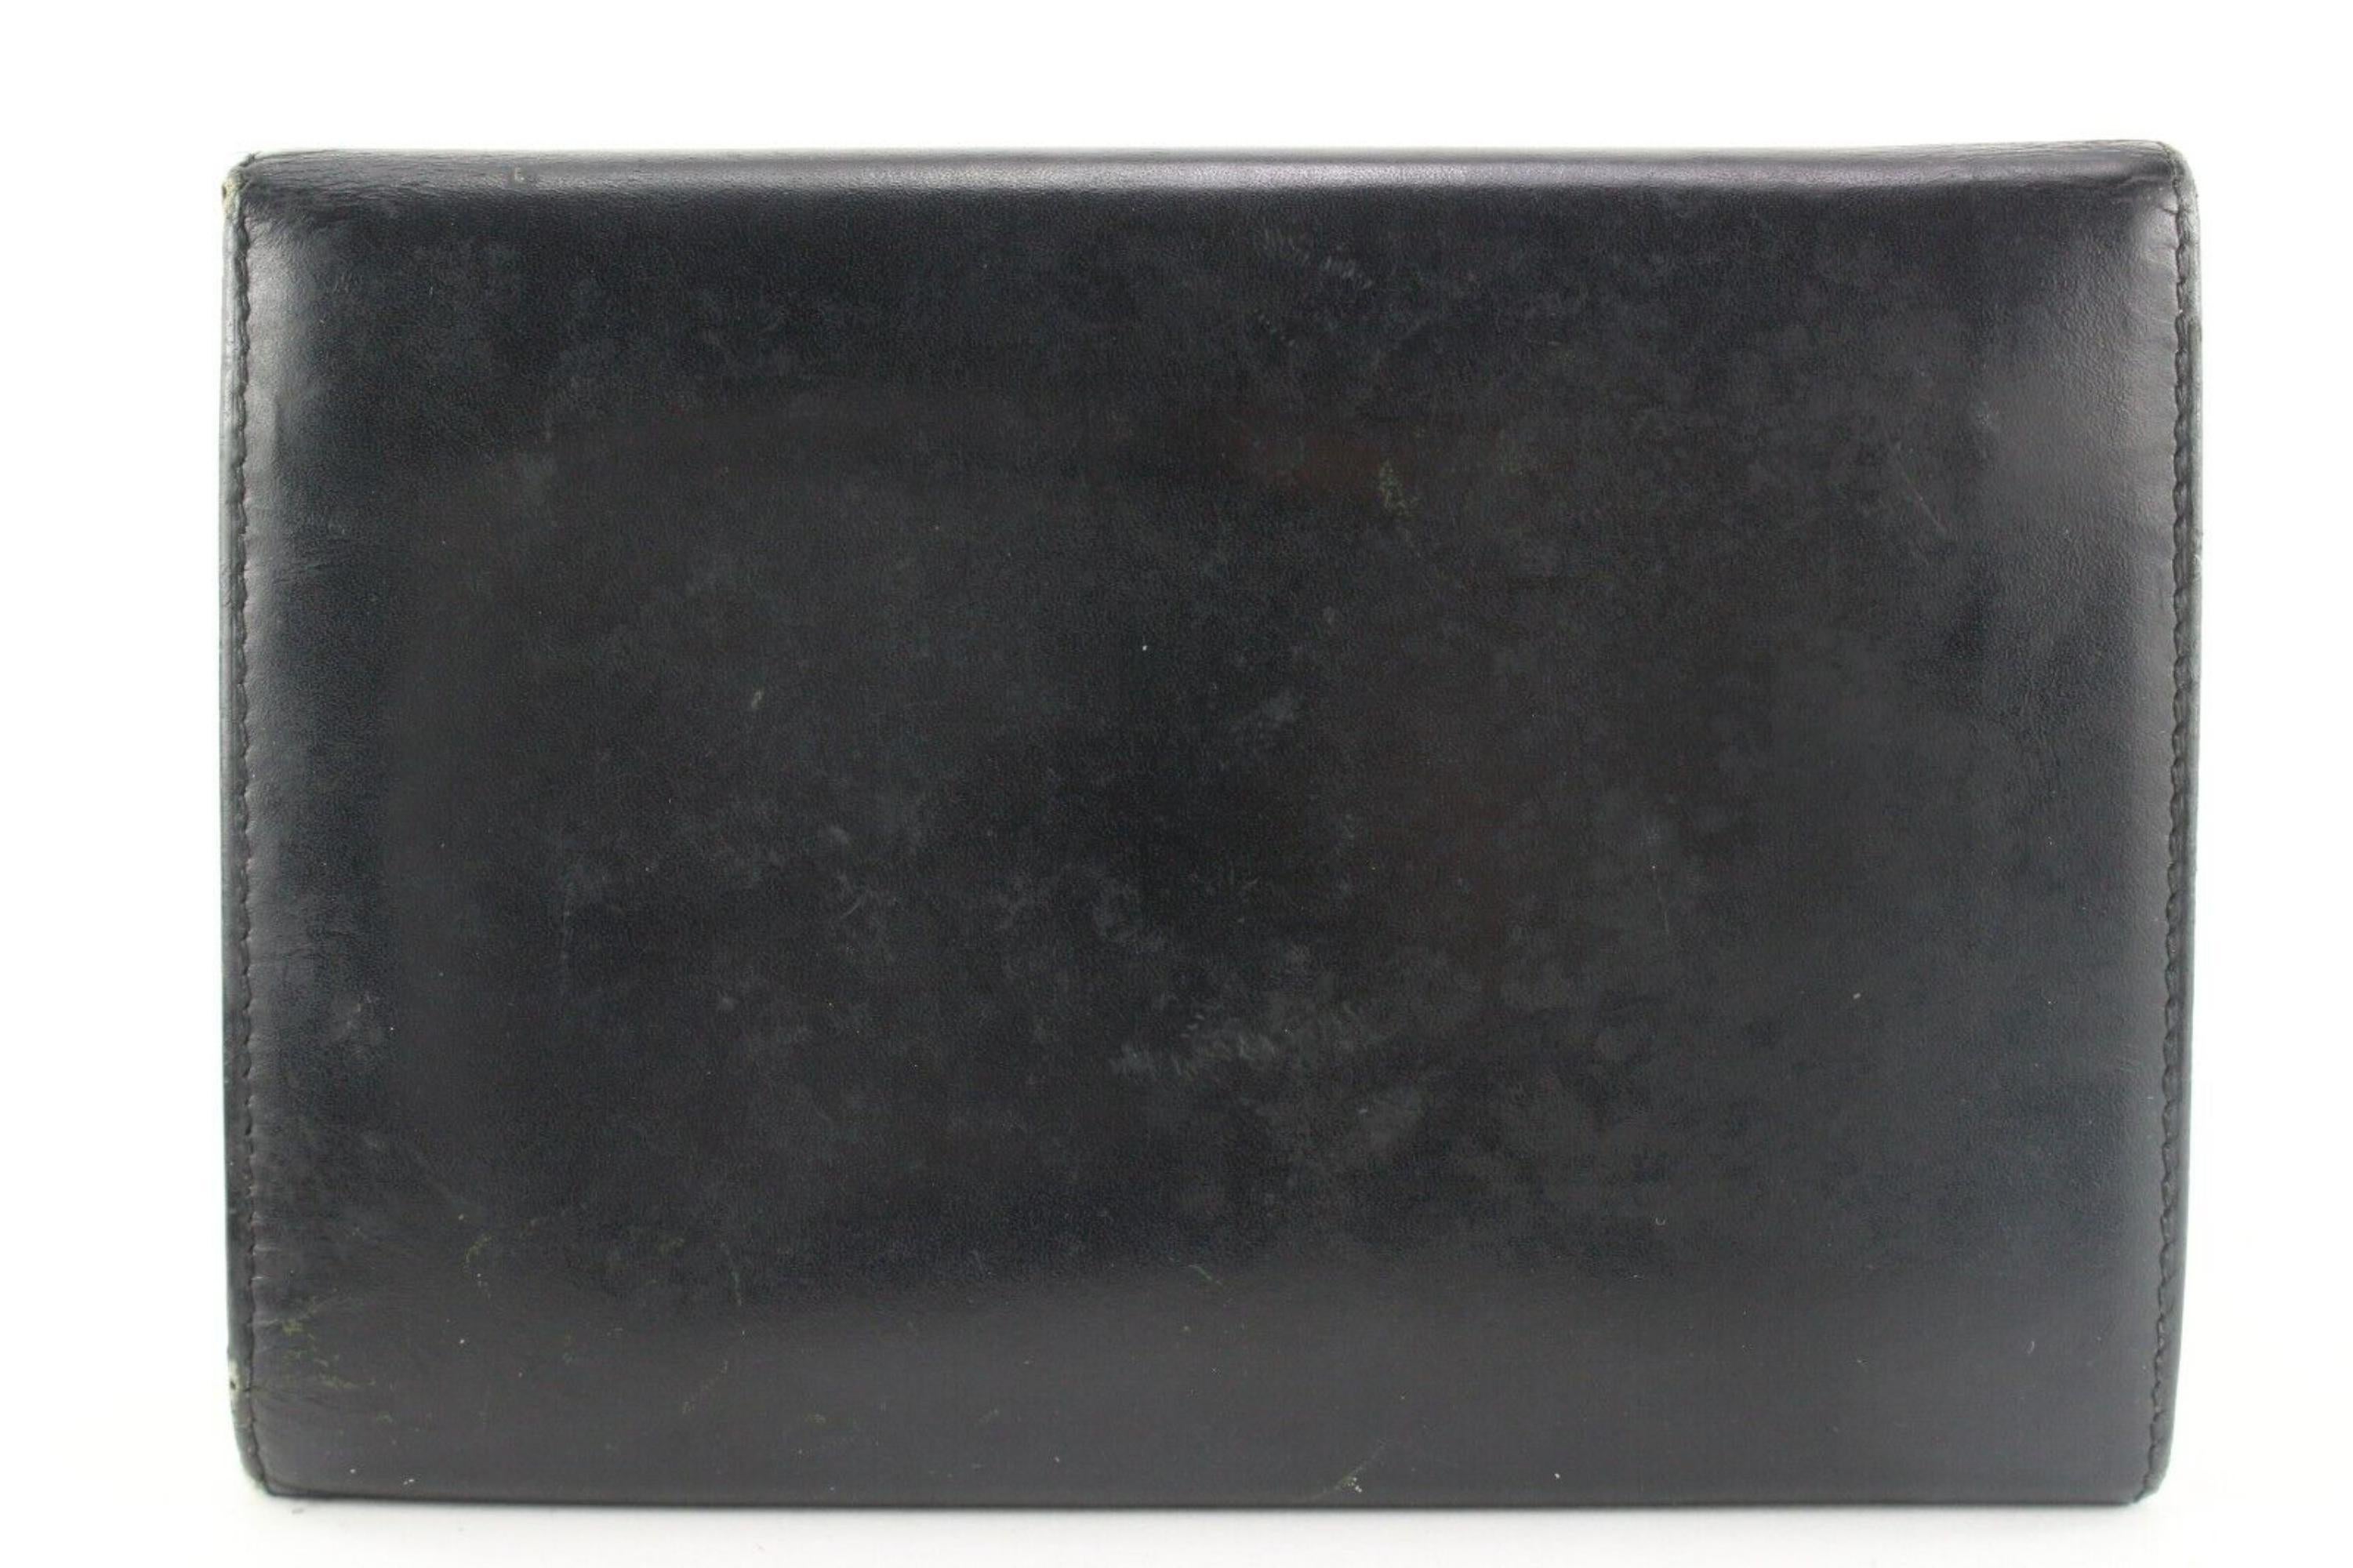 Prada Black Leather Trifold Wallet 2P0509 3